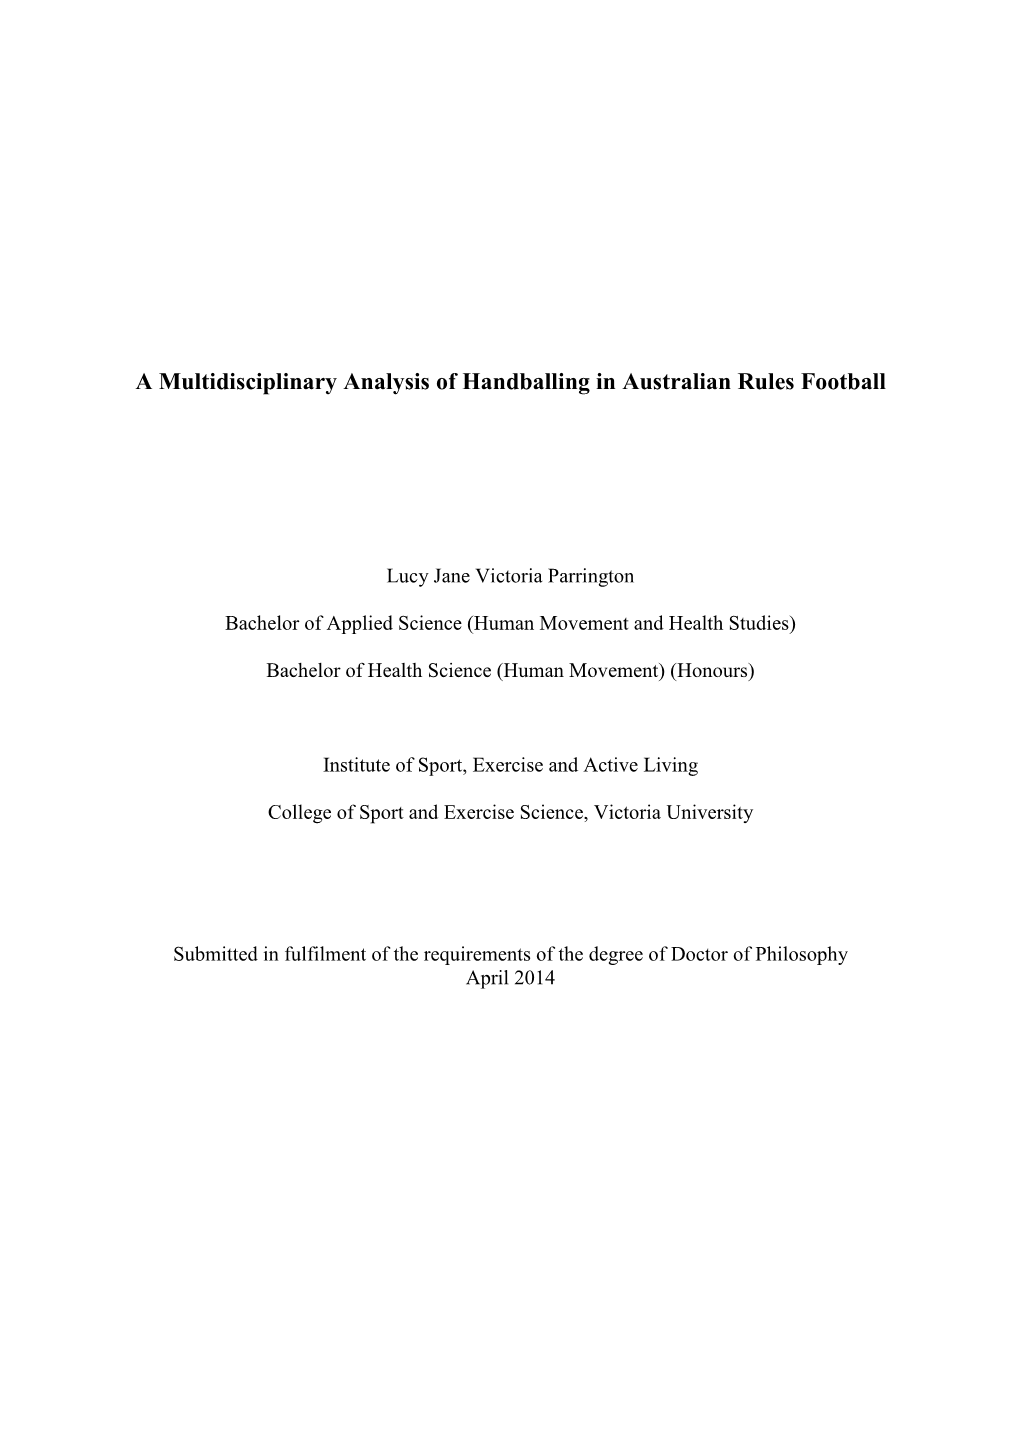 A Multidisciplinary Analysis of the Australian Football Handball